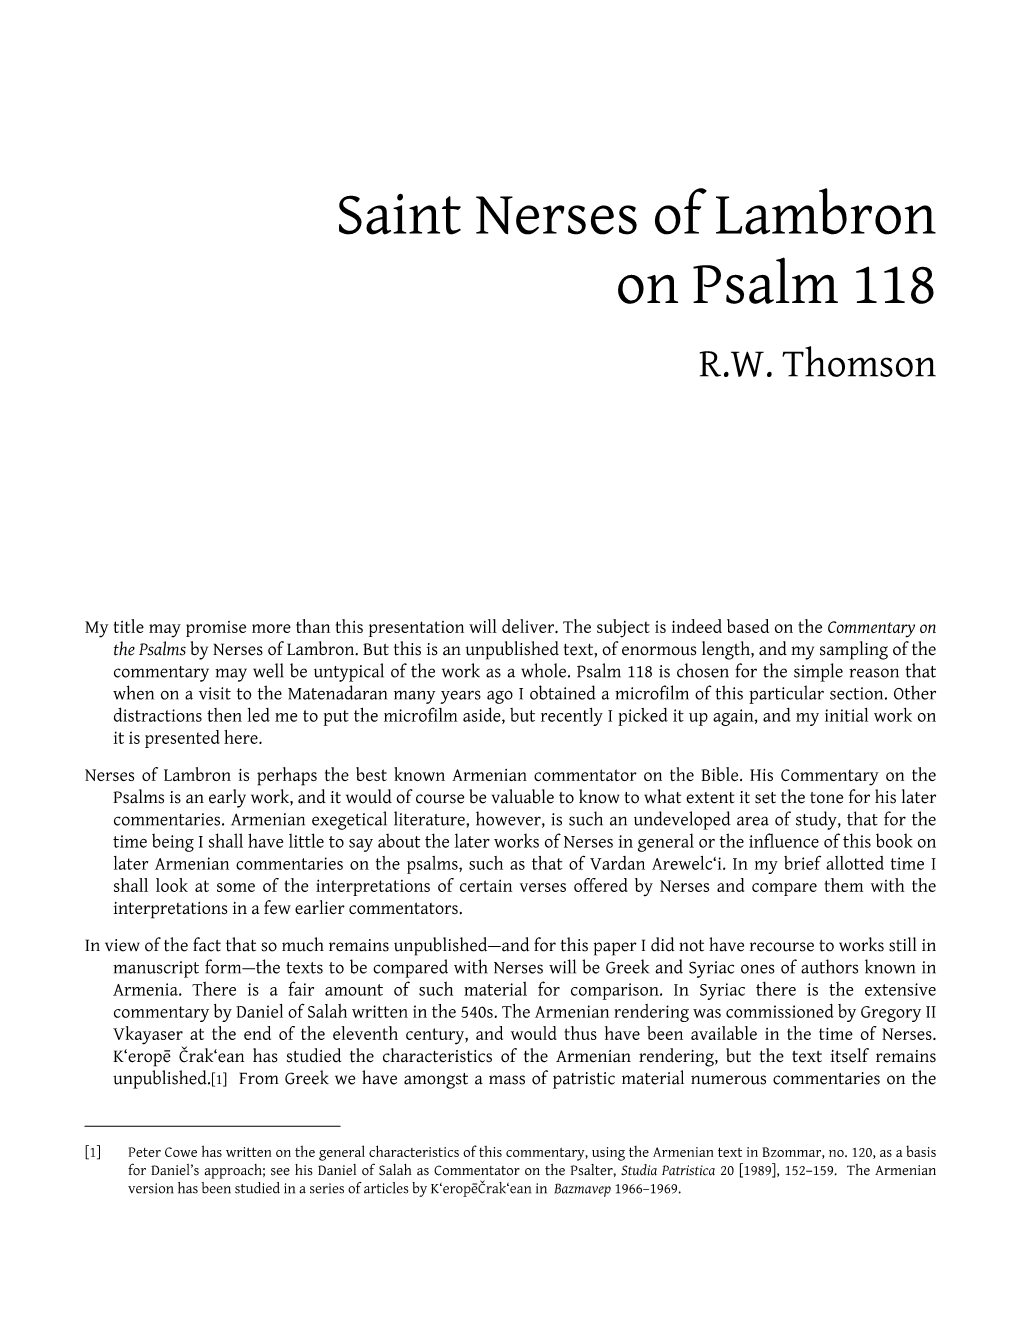 Saint Nerses of Lambron on Psalm 118 R.W